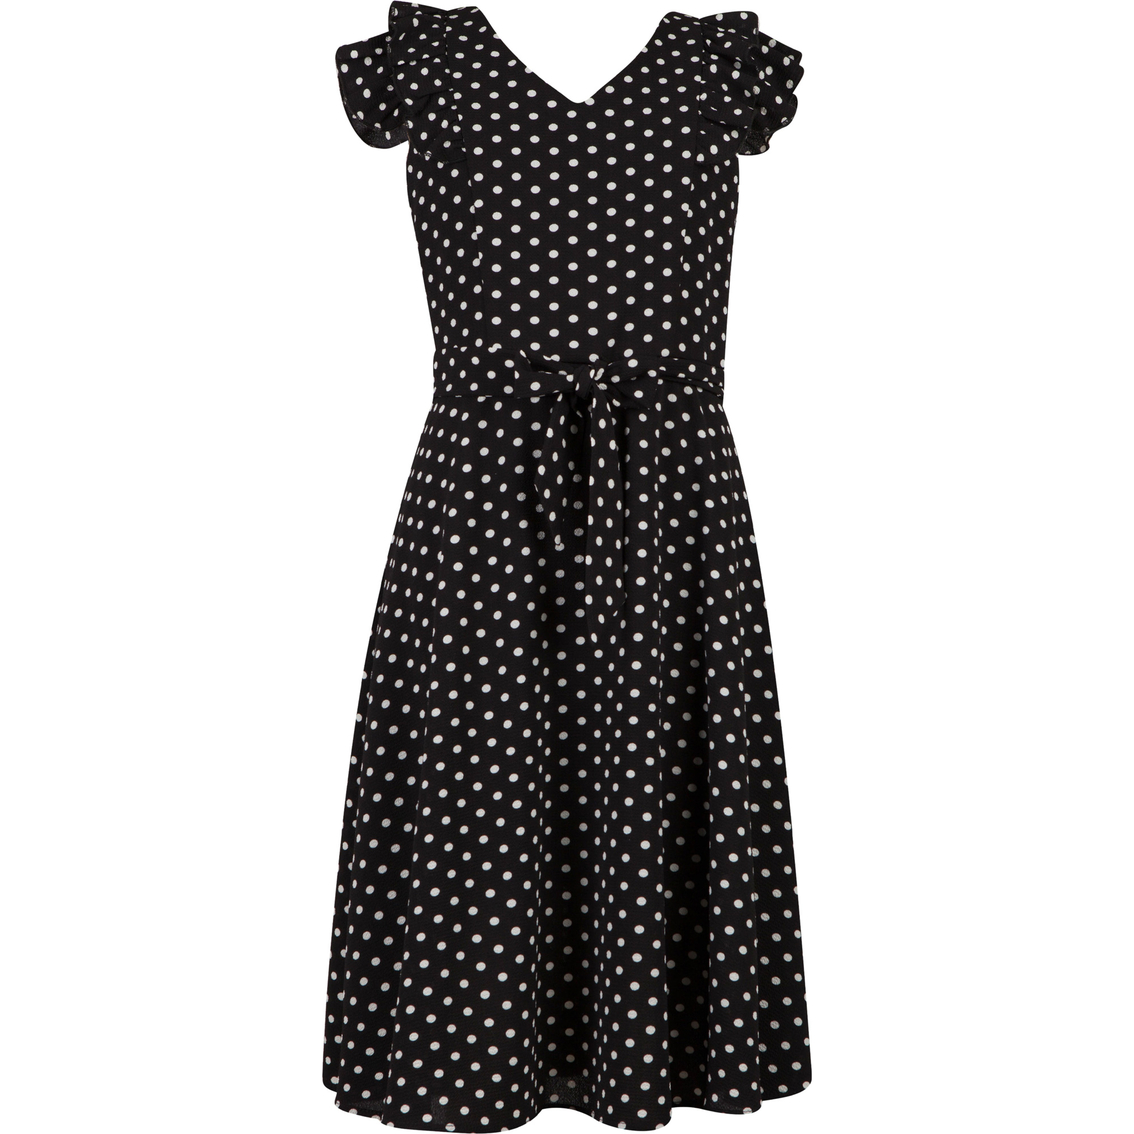 Speechless Polka Dot Dress | Girls 7-16 | Clothing & Accessories | Shop ...